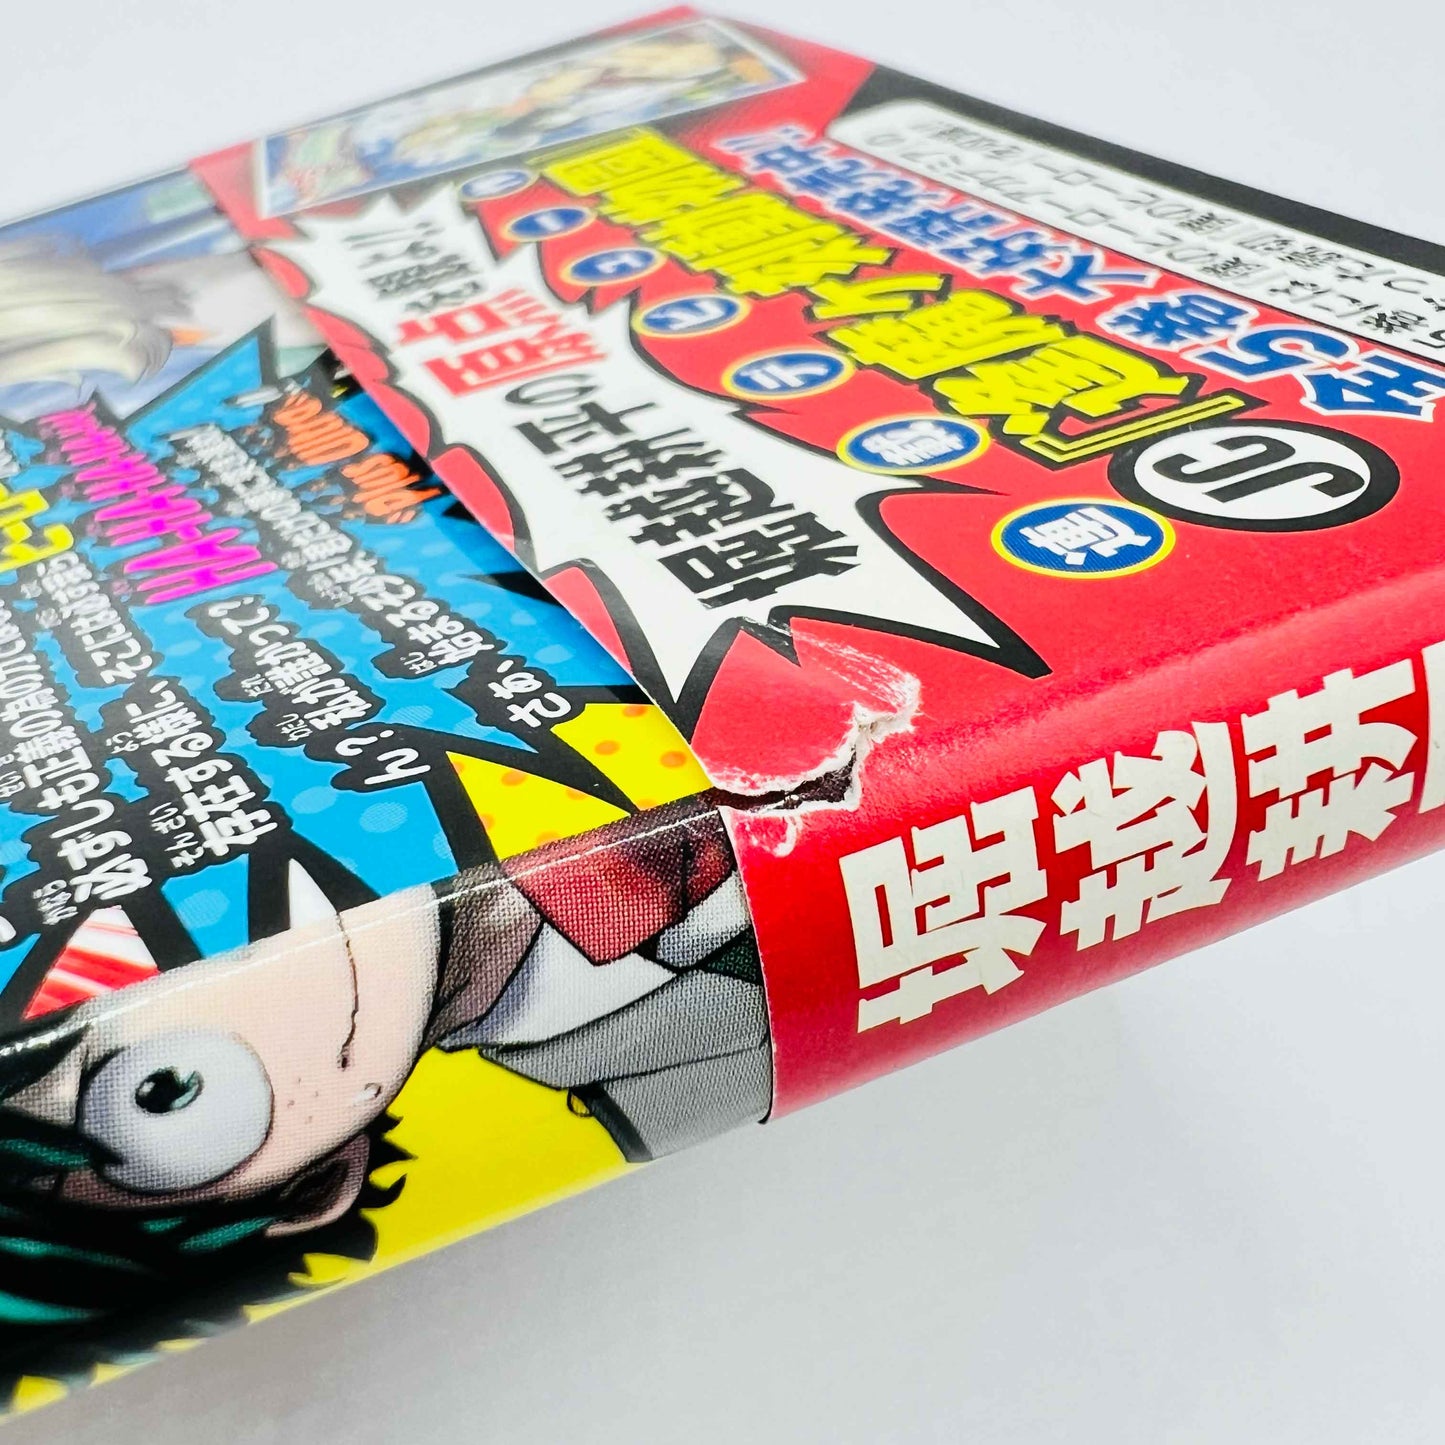 My Hero Academia - Volume 01 /w Obi - 1stPrint.net - 1st First Print Edition Manga Store - M-MHA-01-017